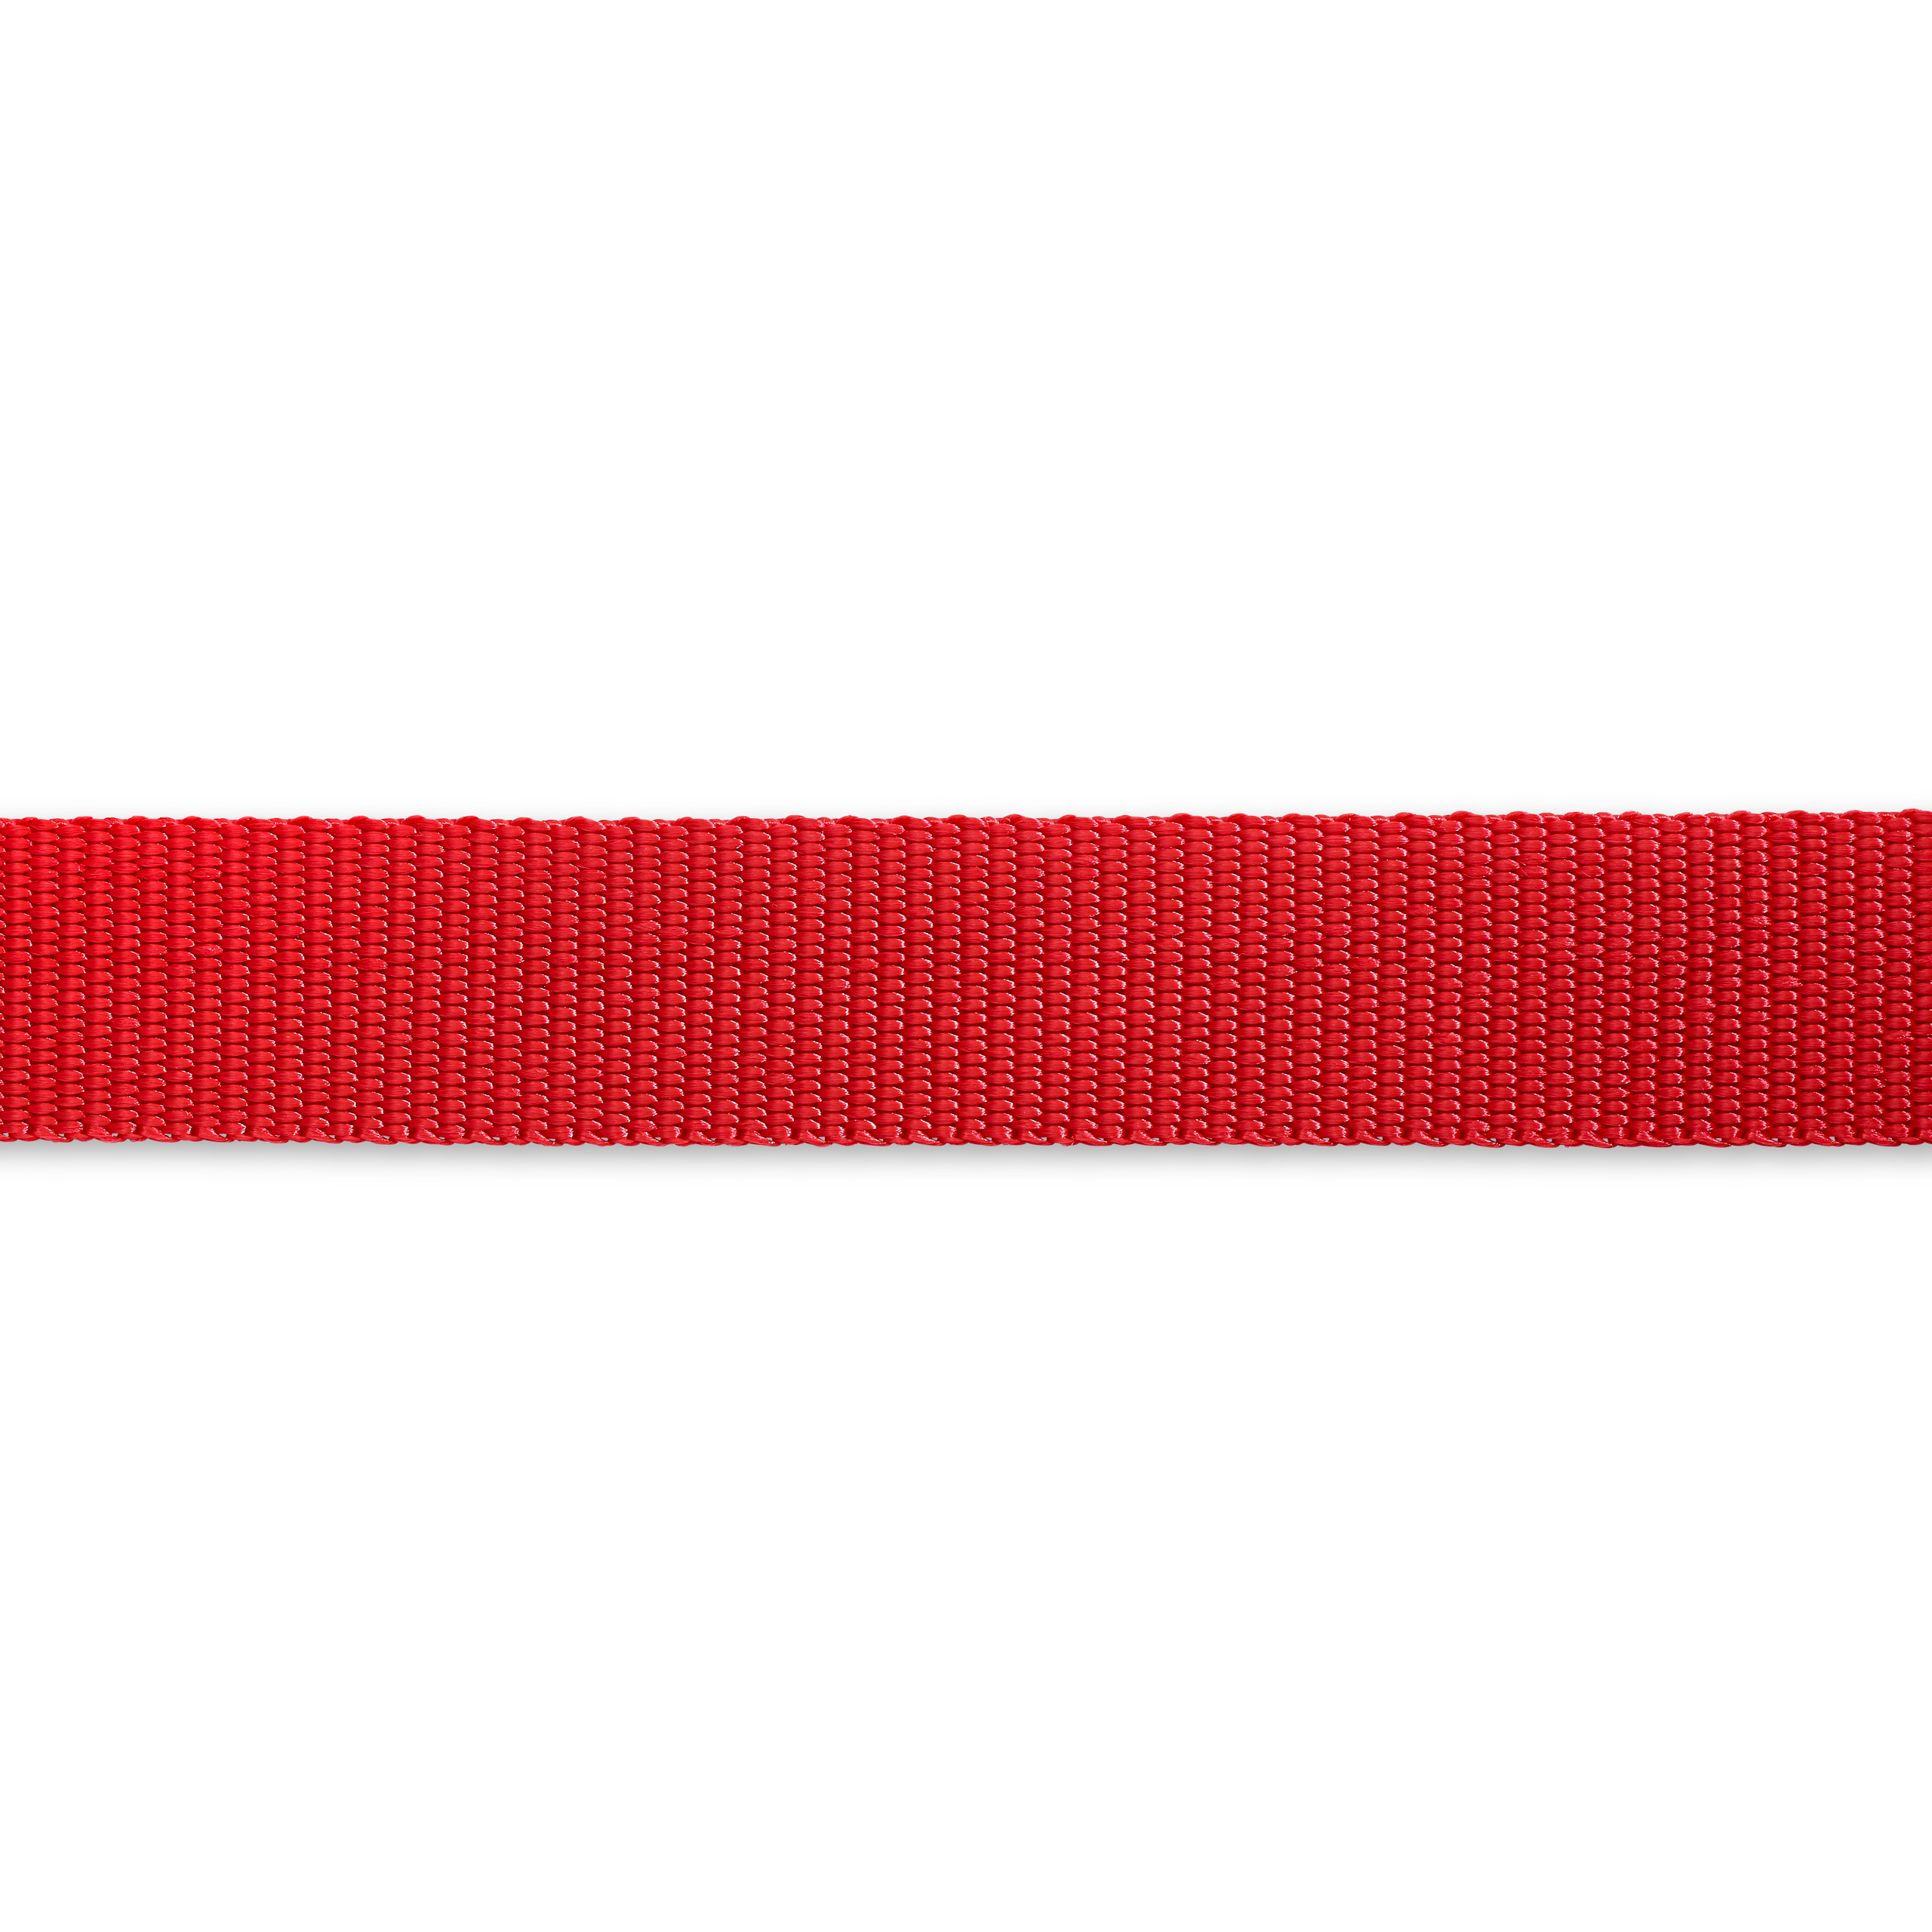 Strap for rucksacks 25 mm red, 10 m